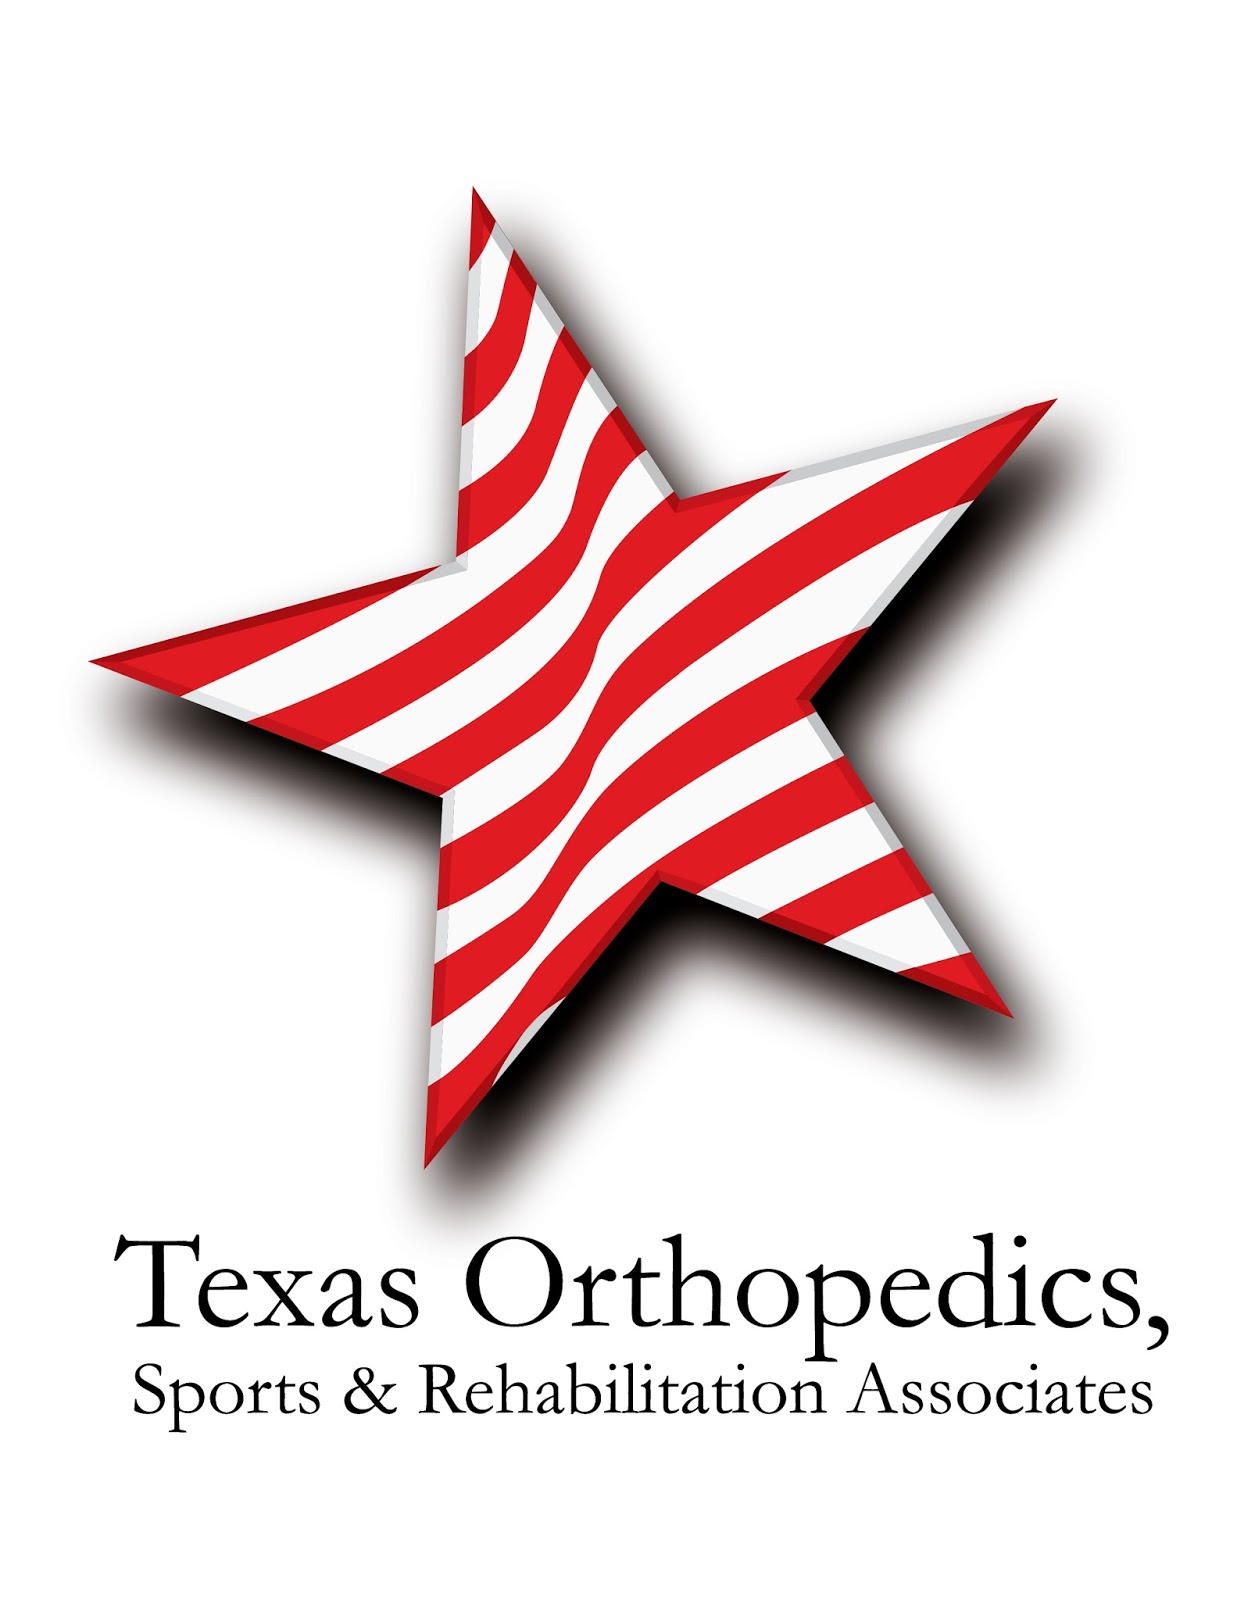 Texas Orthopedics Announces Bundled Payment Initiative | Texas Orthopedics